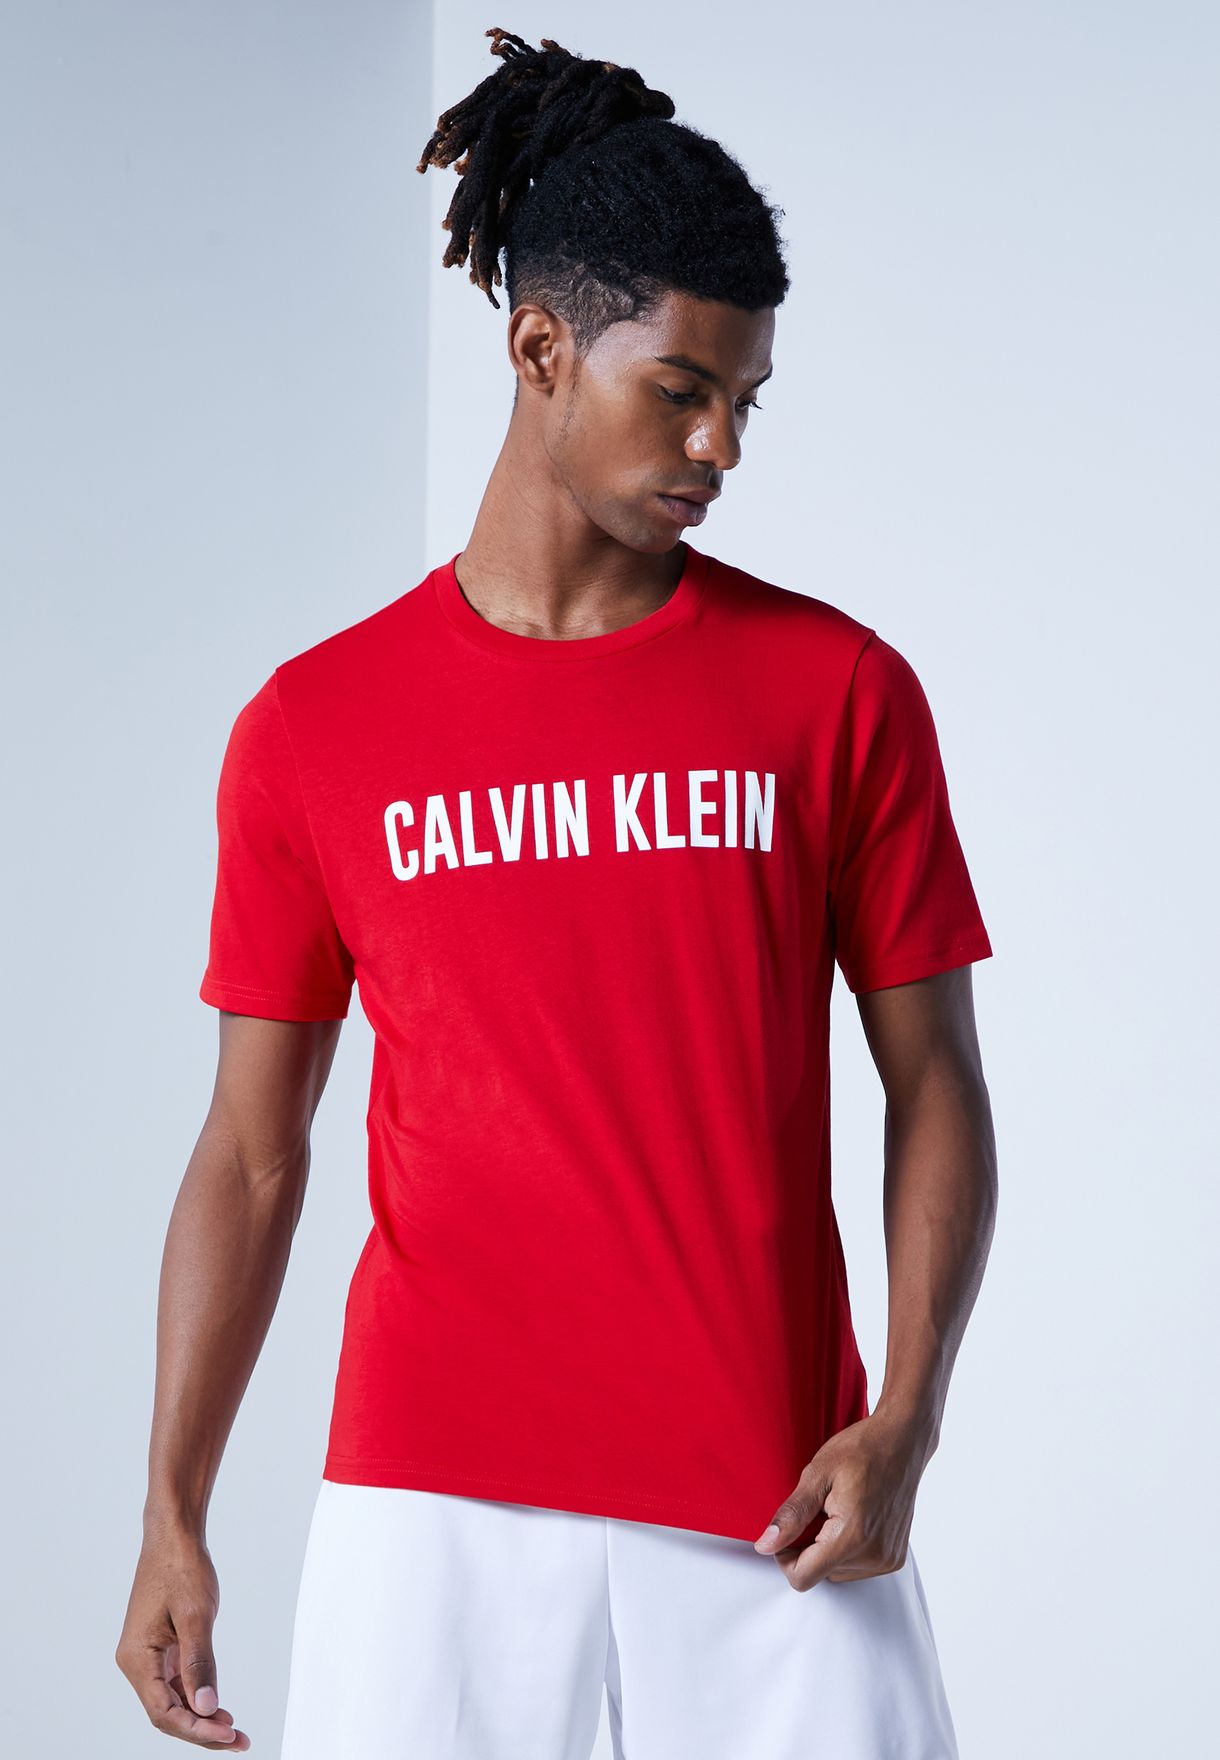 calvin klein red t shirt mens